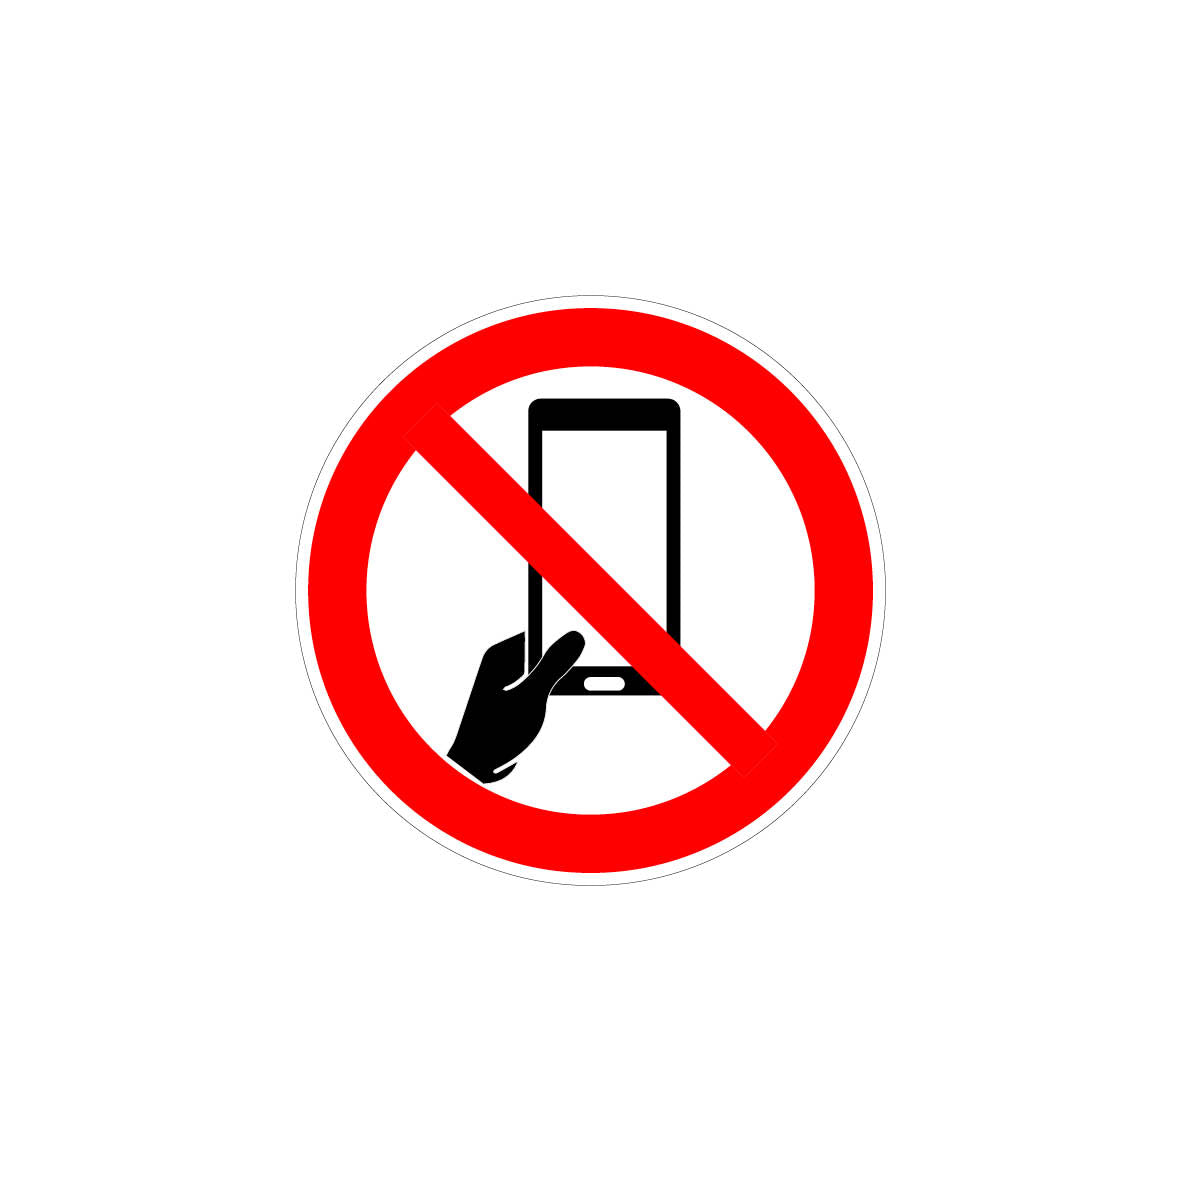 6.V-988 Handy verboten, Verbotszeichen, praxisbewährt